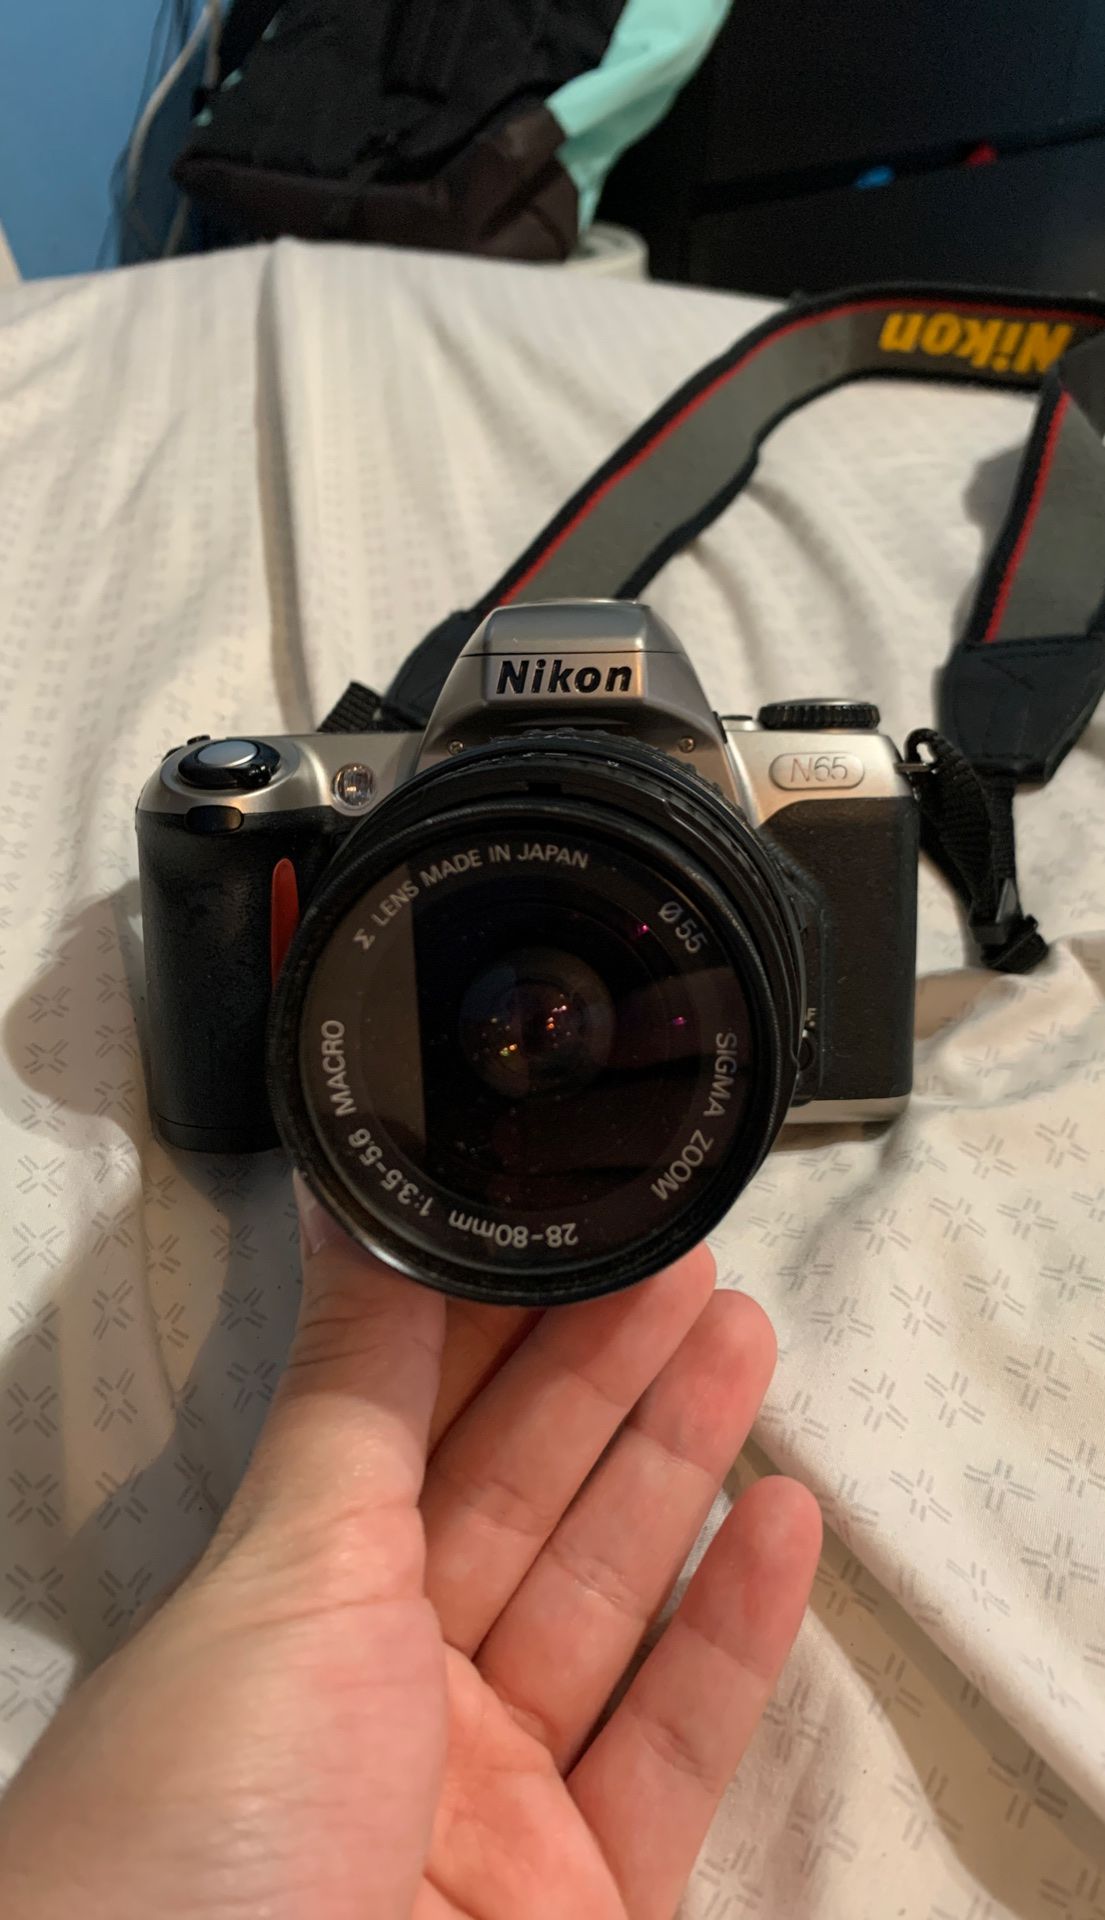 Nikon N65